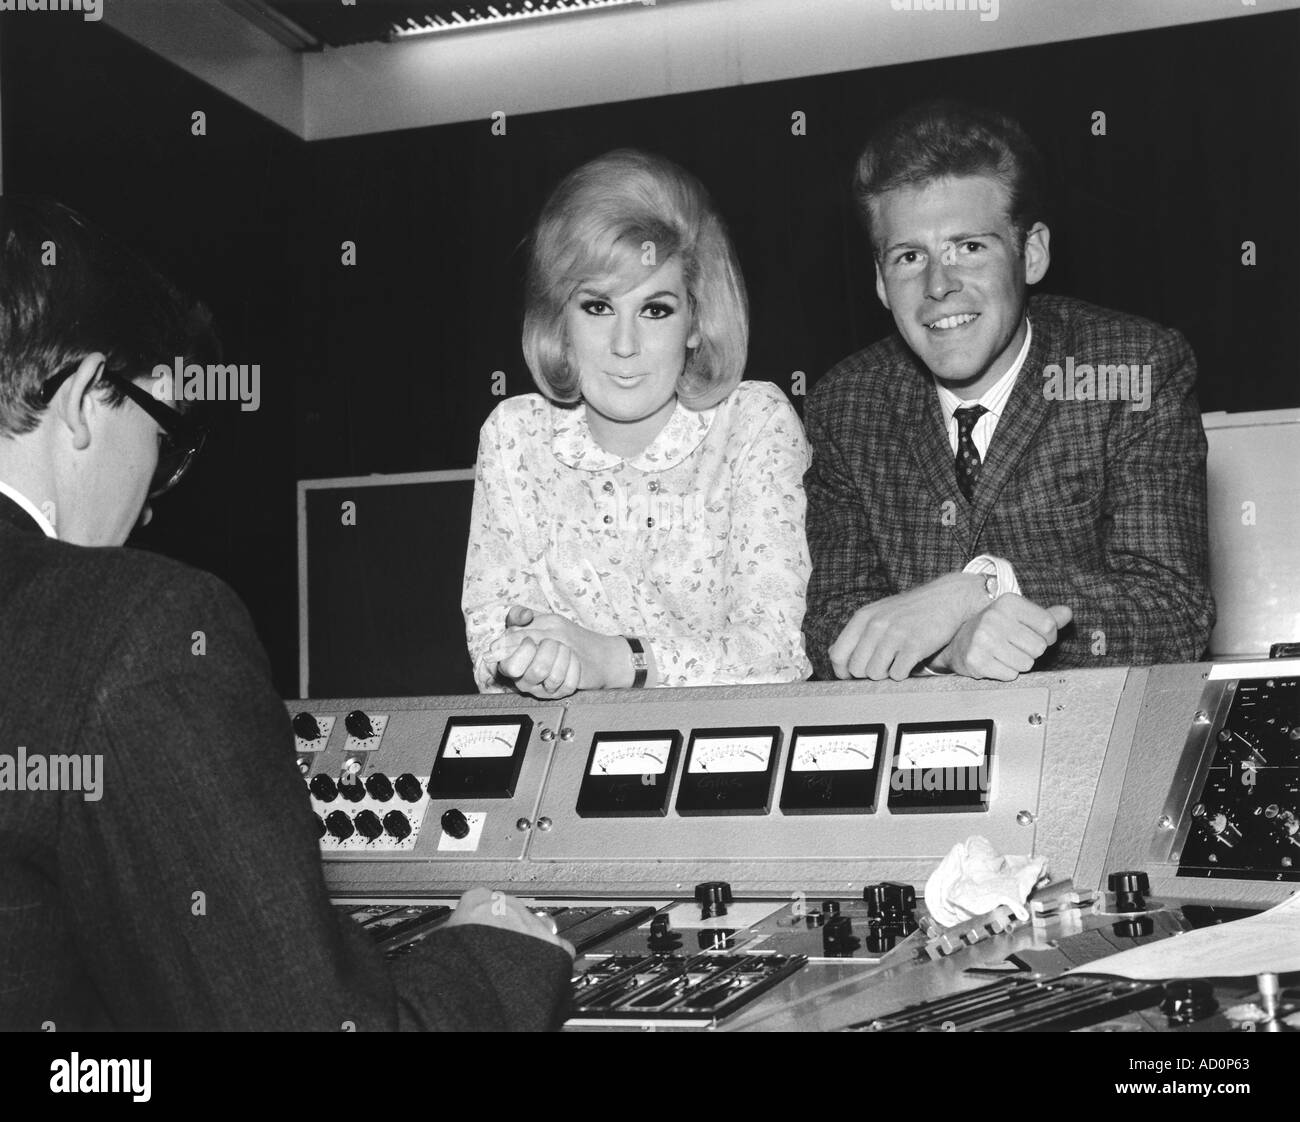 Recording studio 1960's Black and White Stock Photos & Images - Alamy